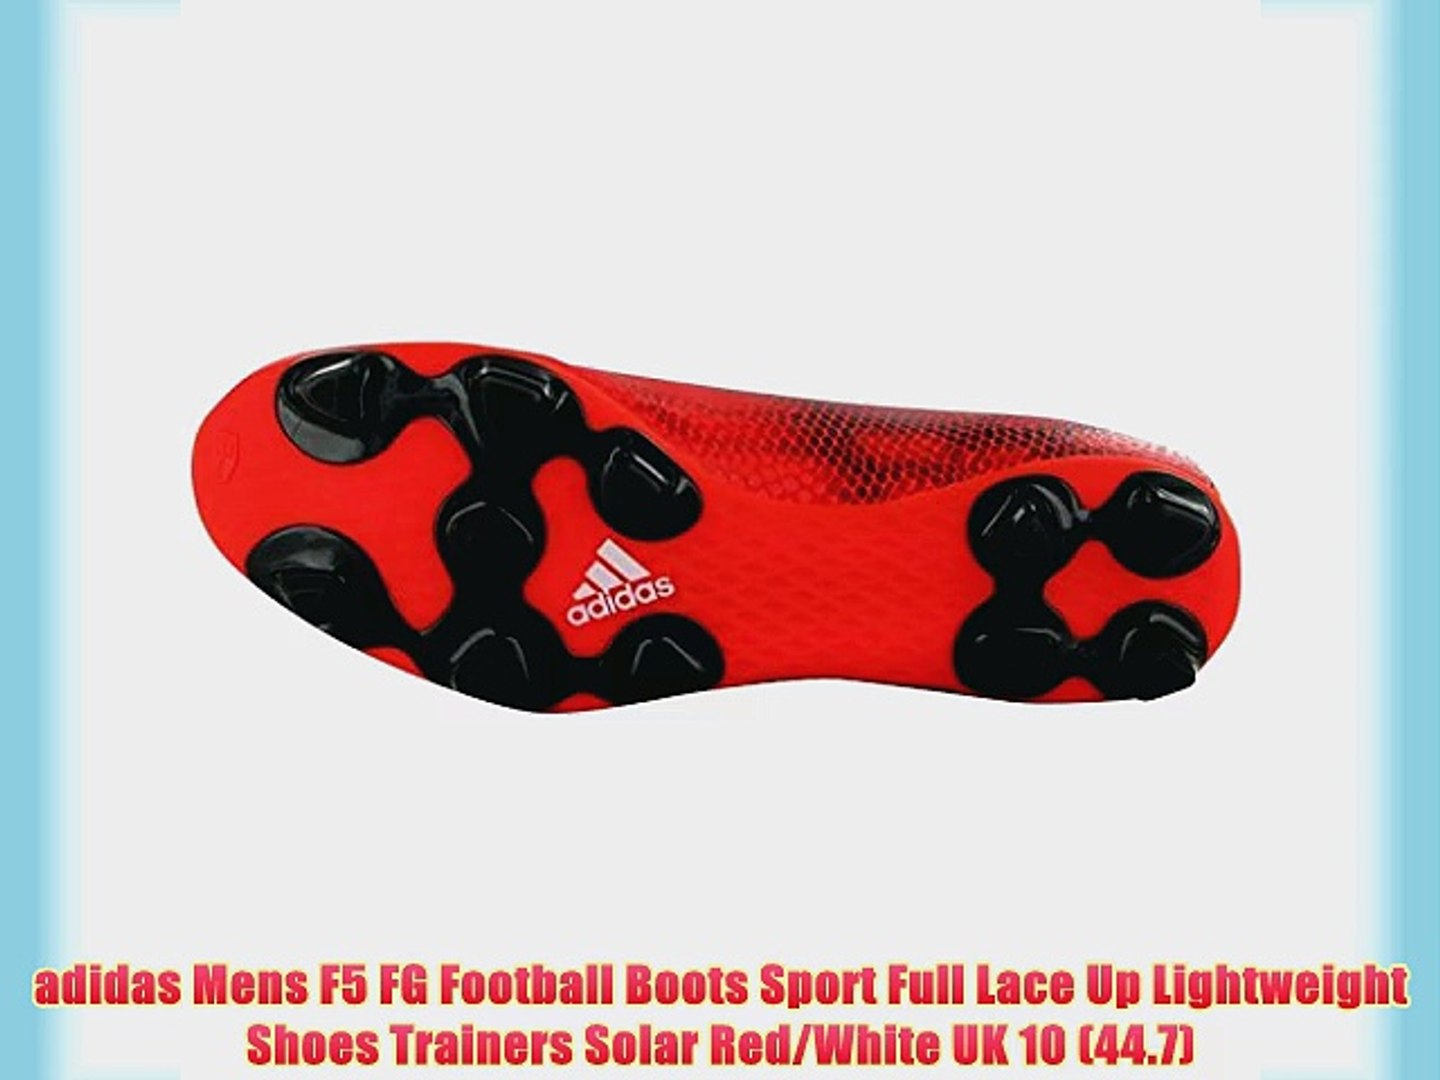 Adidas Mens F5 Fg Football Boots Sport Full Lace Up Lightweight